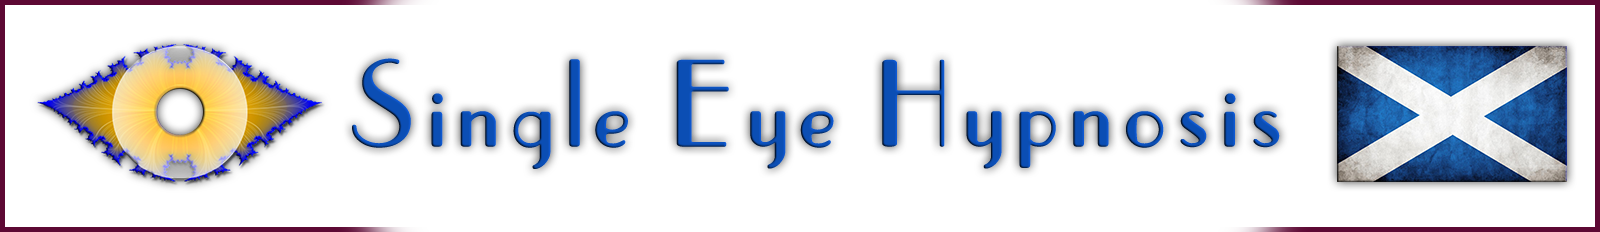 Single Eye Hypnosis - www.hypnosis.scot